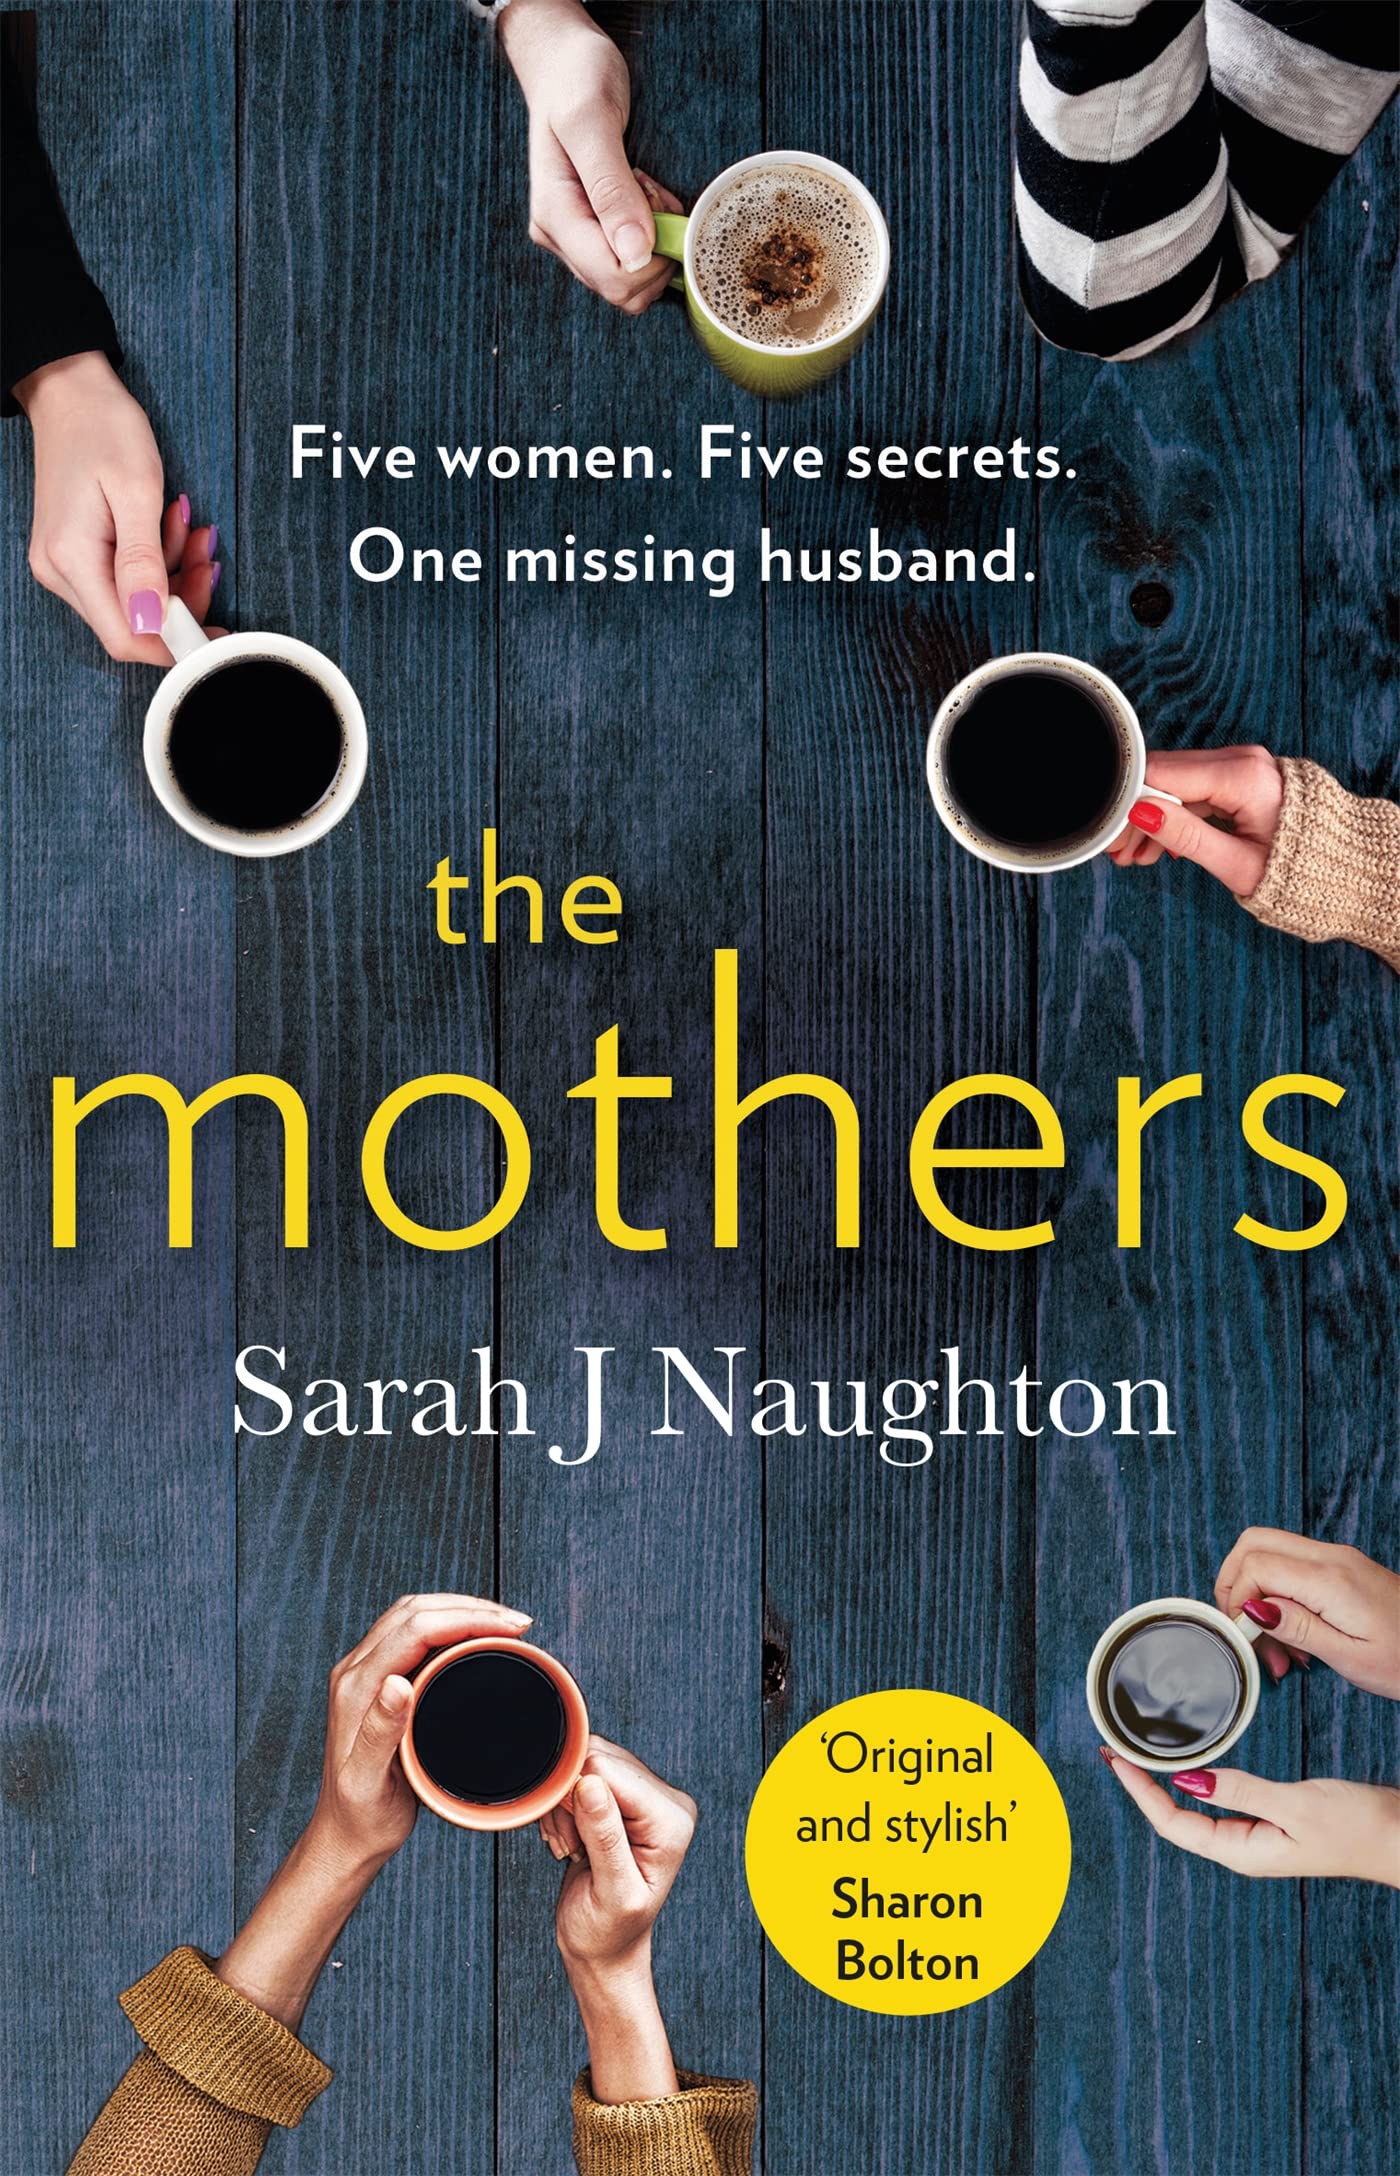 The Mothers: Five women. Five secrets. One missing husband.